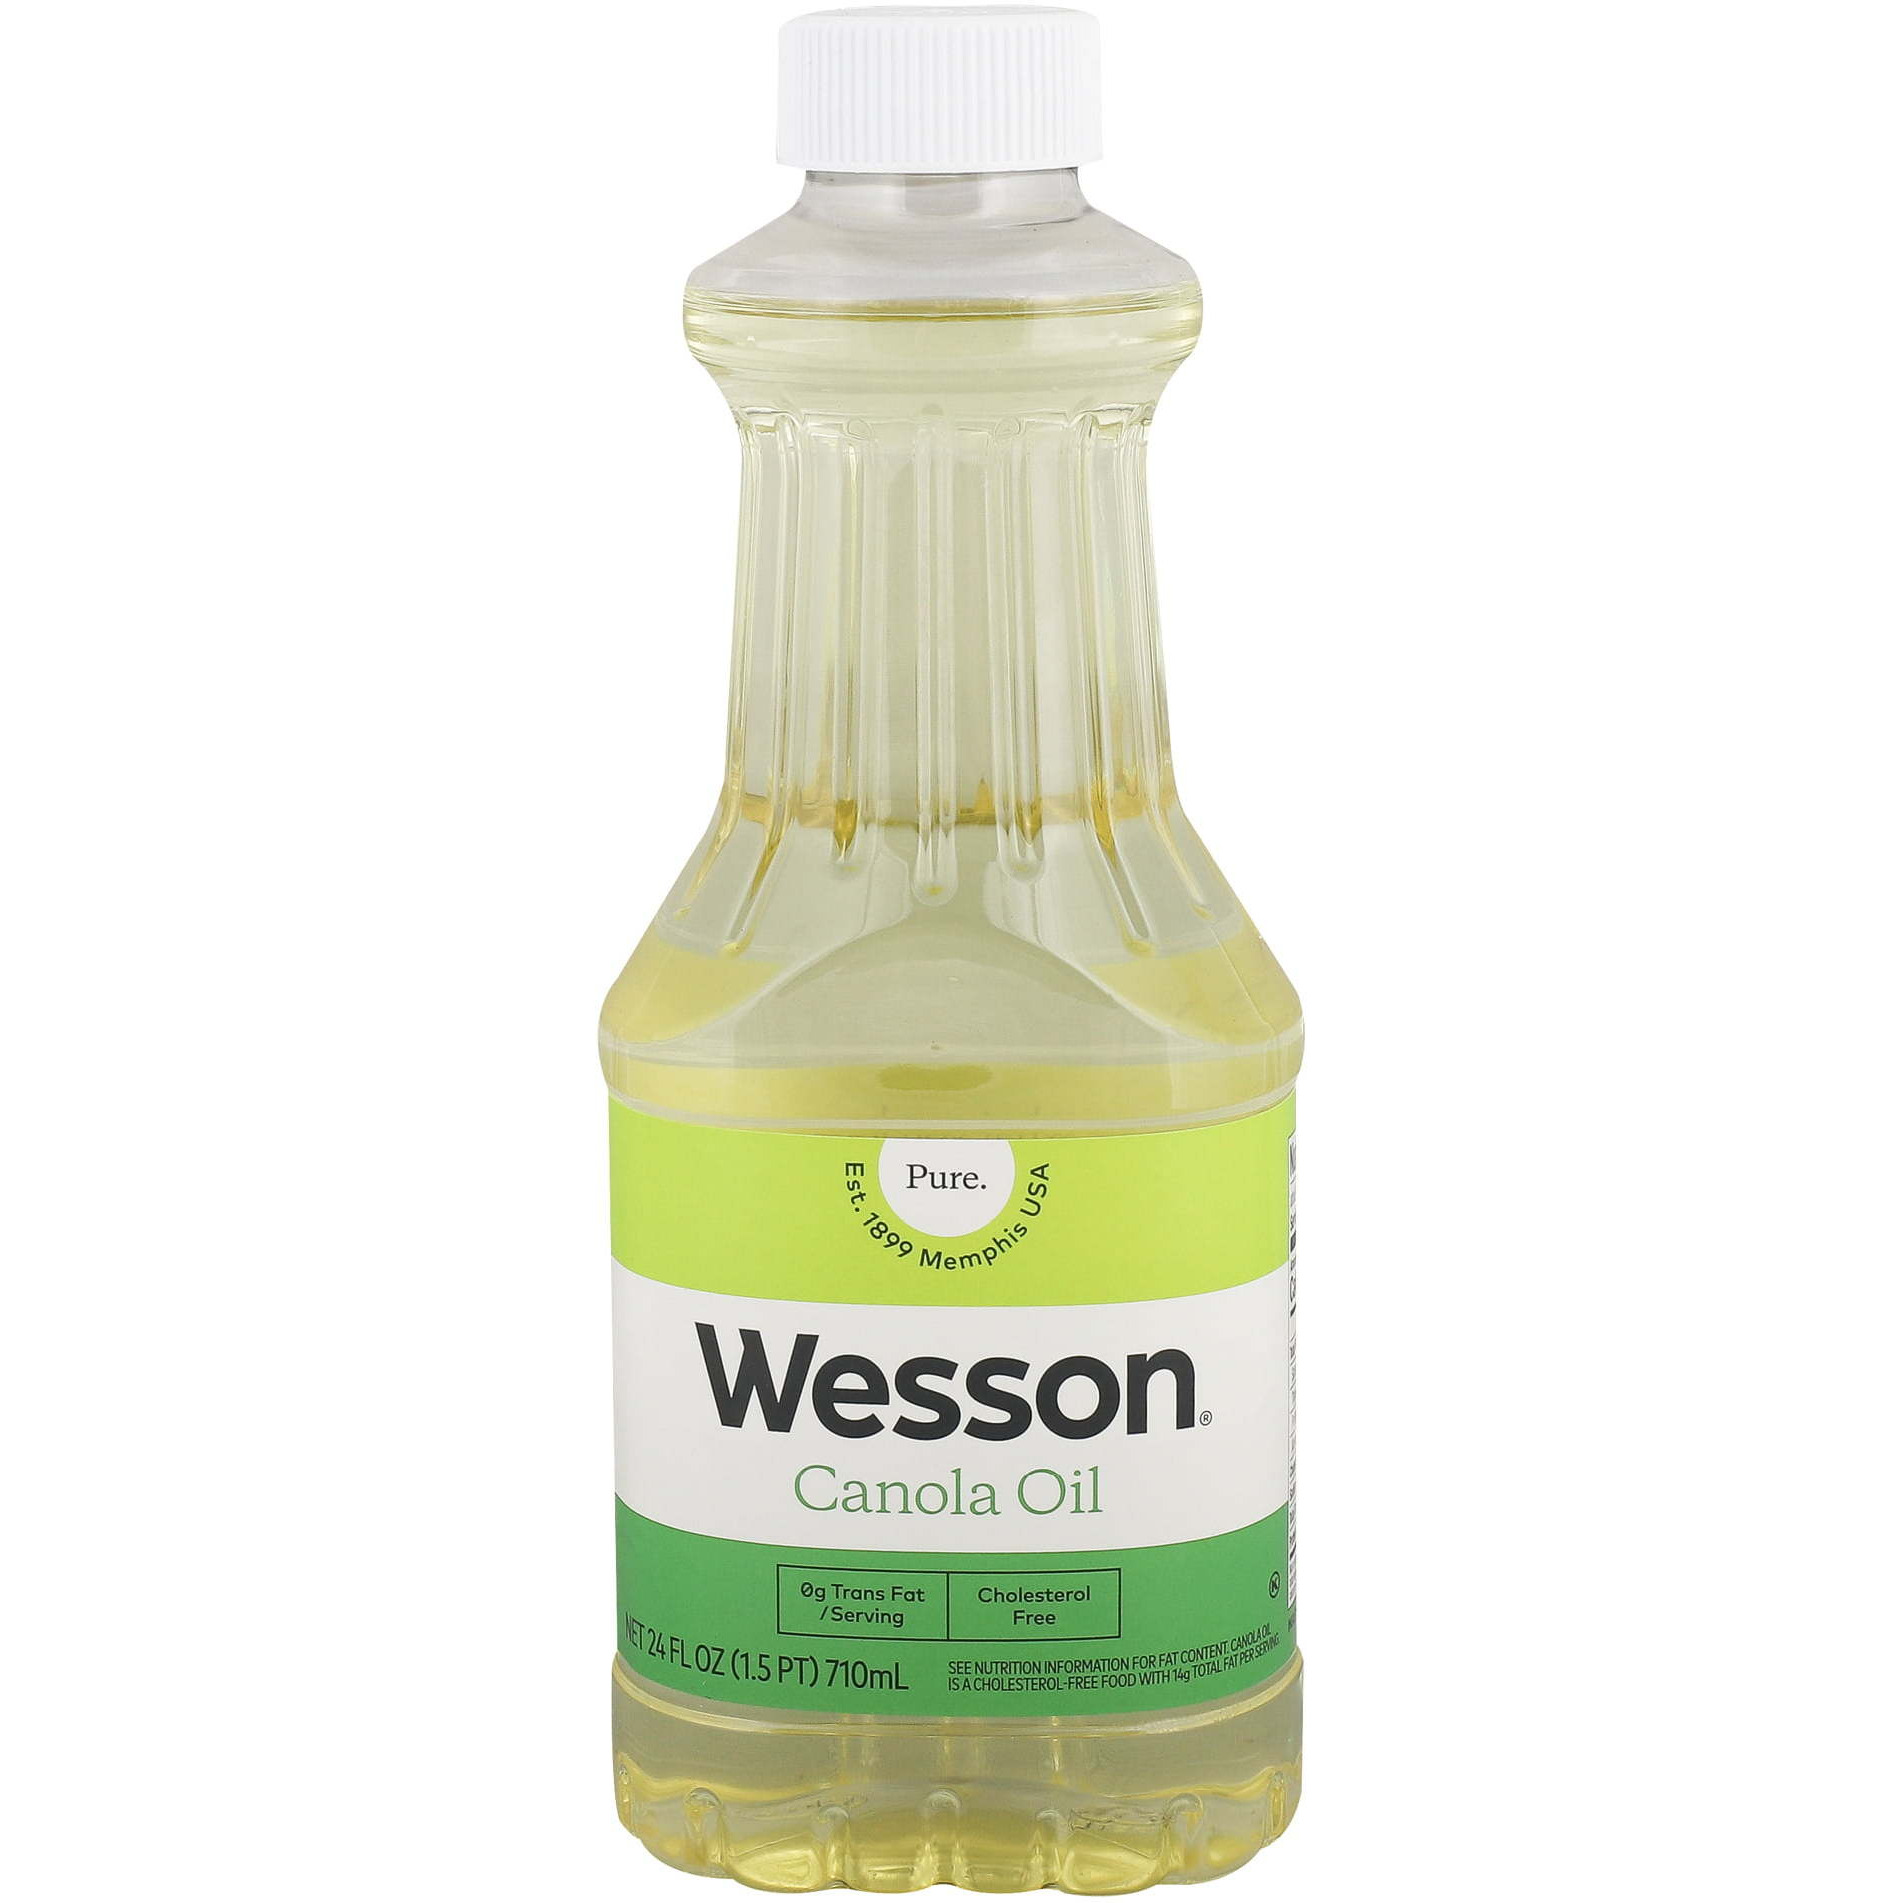 Case of 12 - Wesson Canola Oil - 24 Oz (680 Gm)